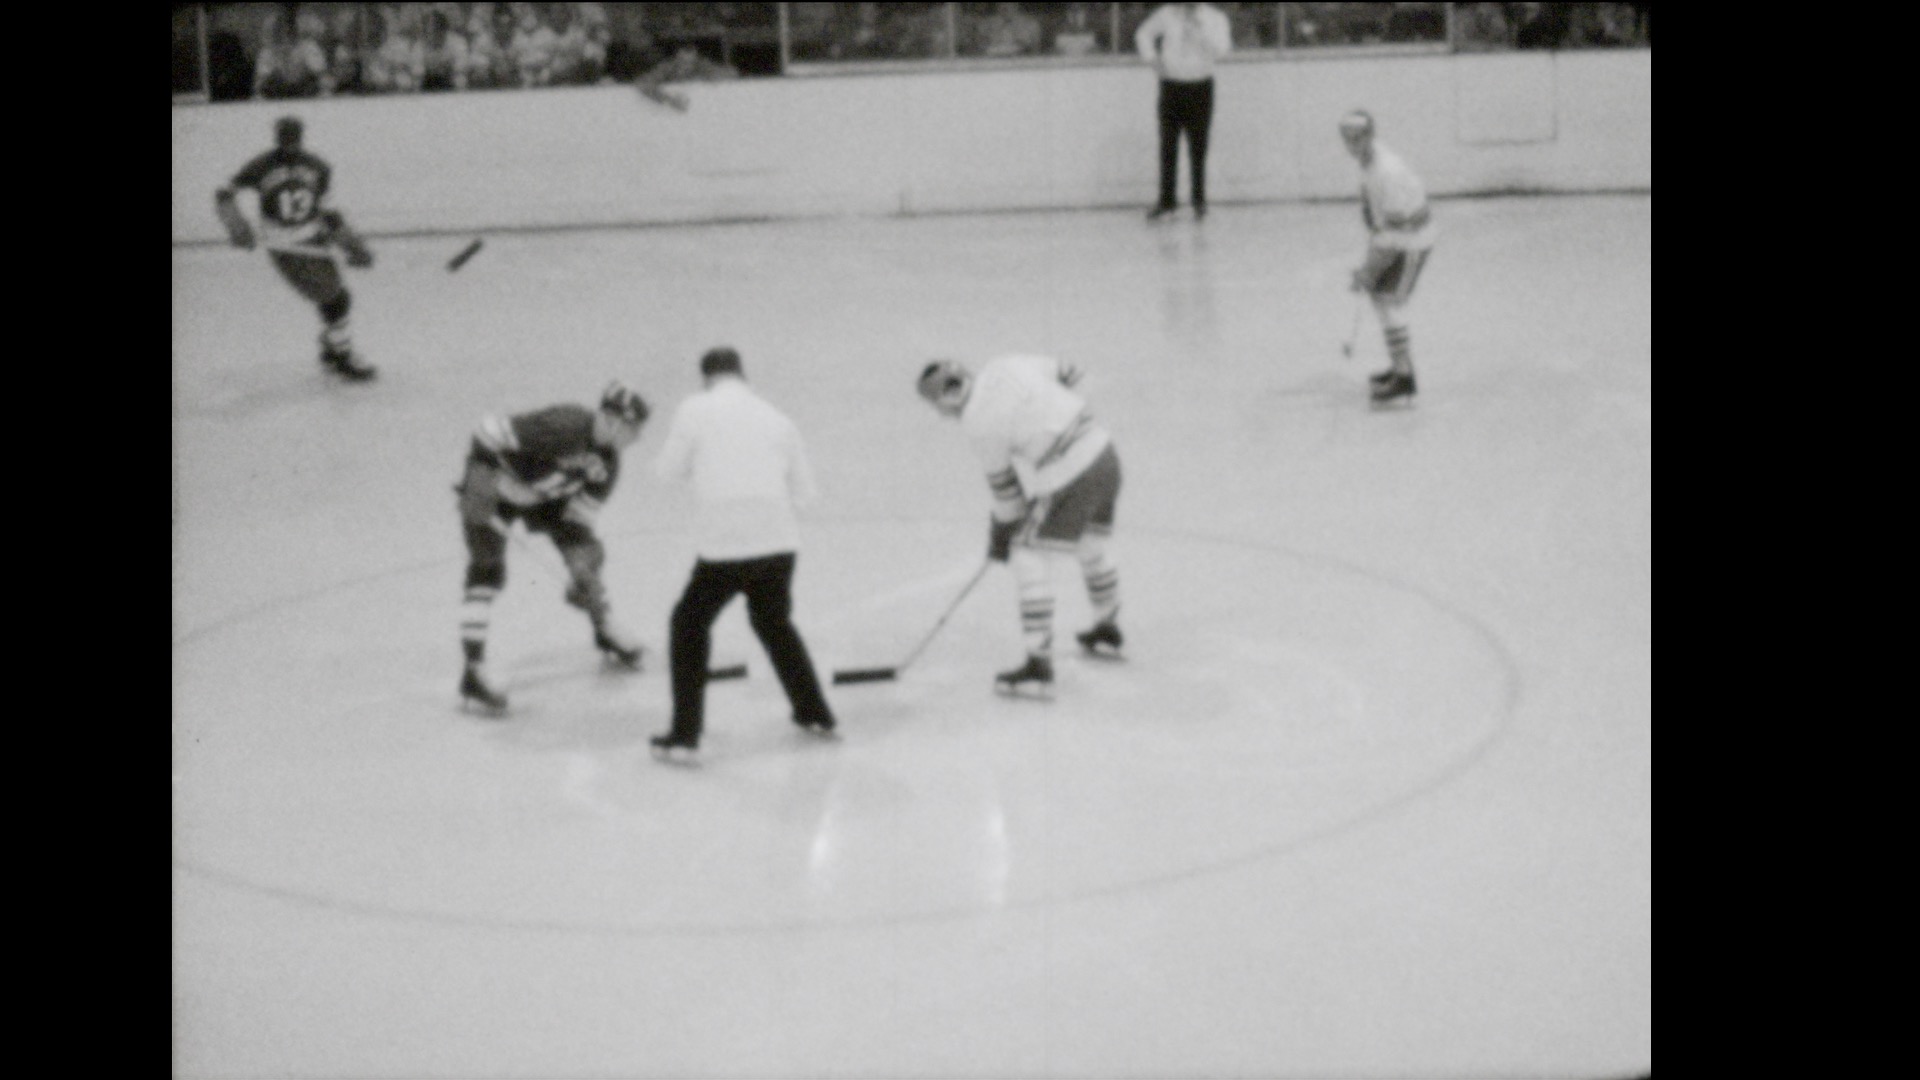 MSC Hockey vs. St. Lawrence, circa 1952